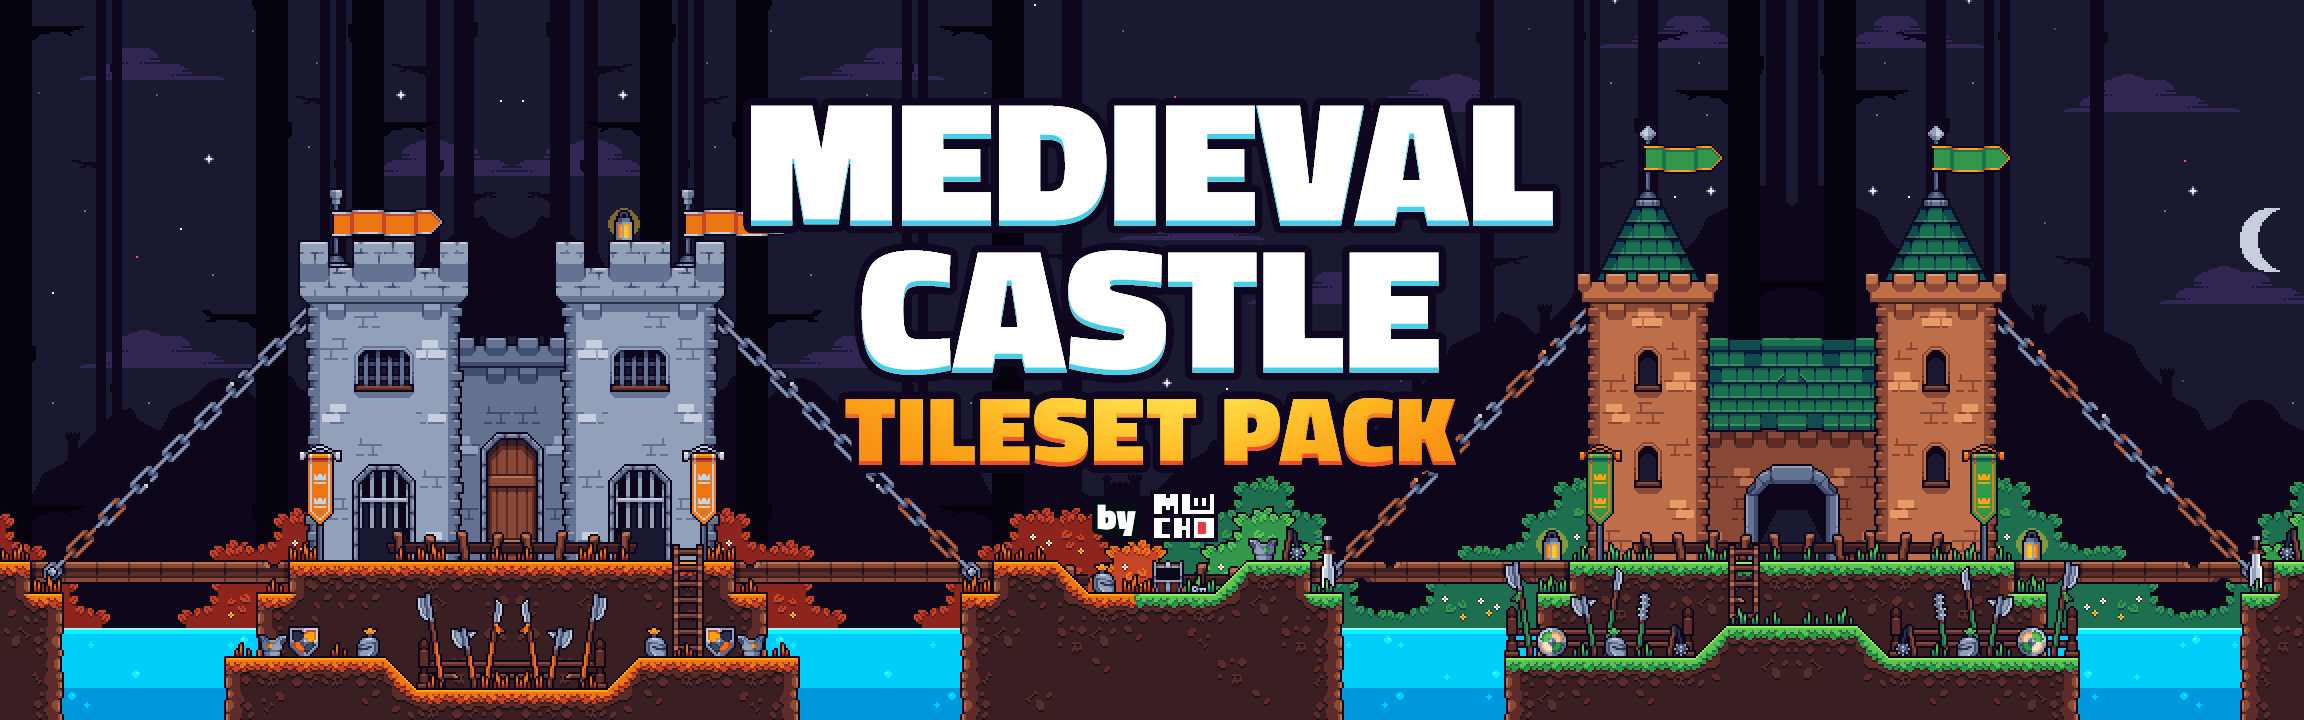 Medieval Castle Tileset Pack